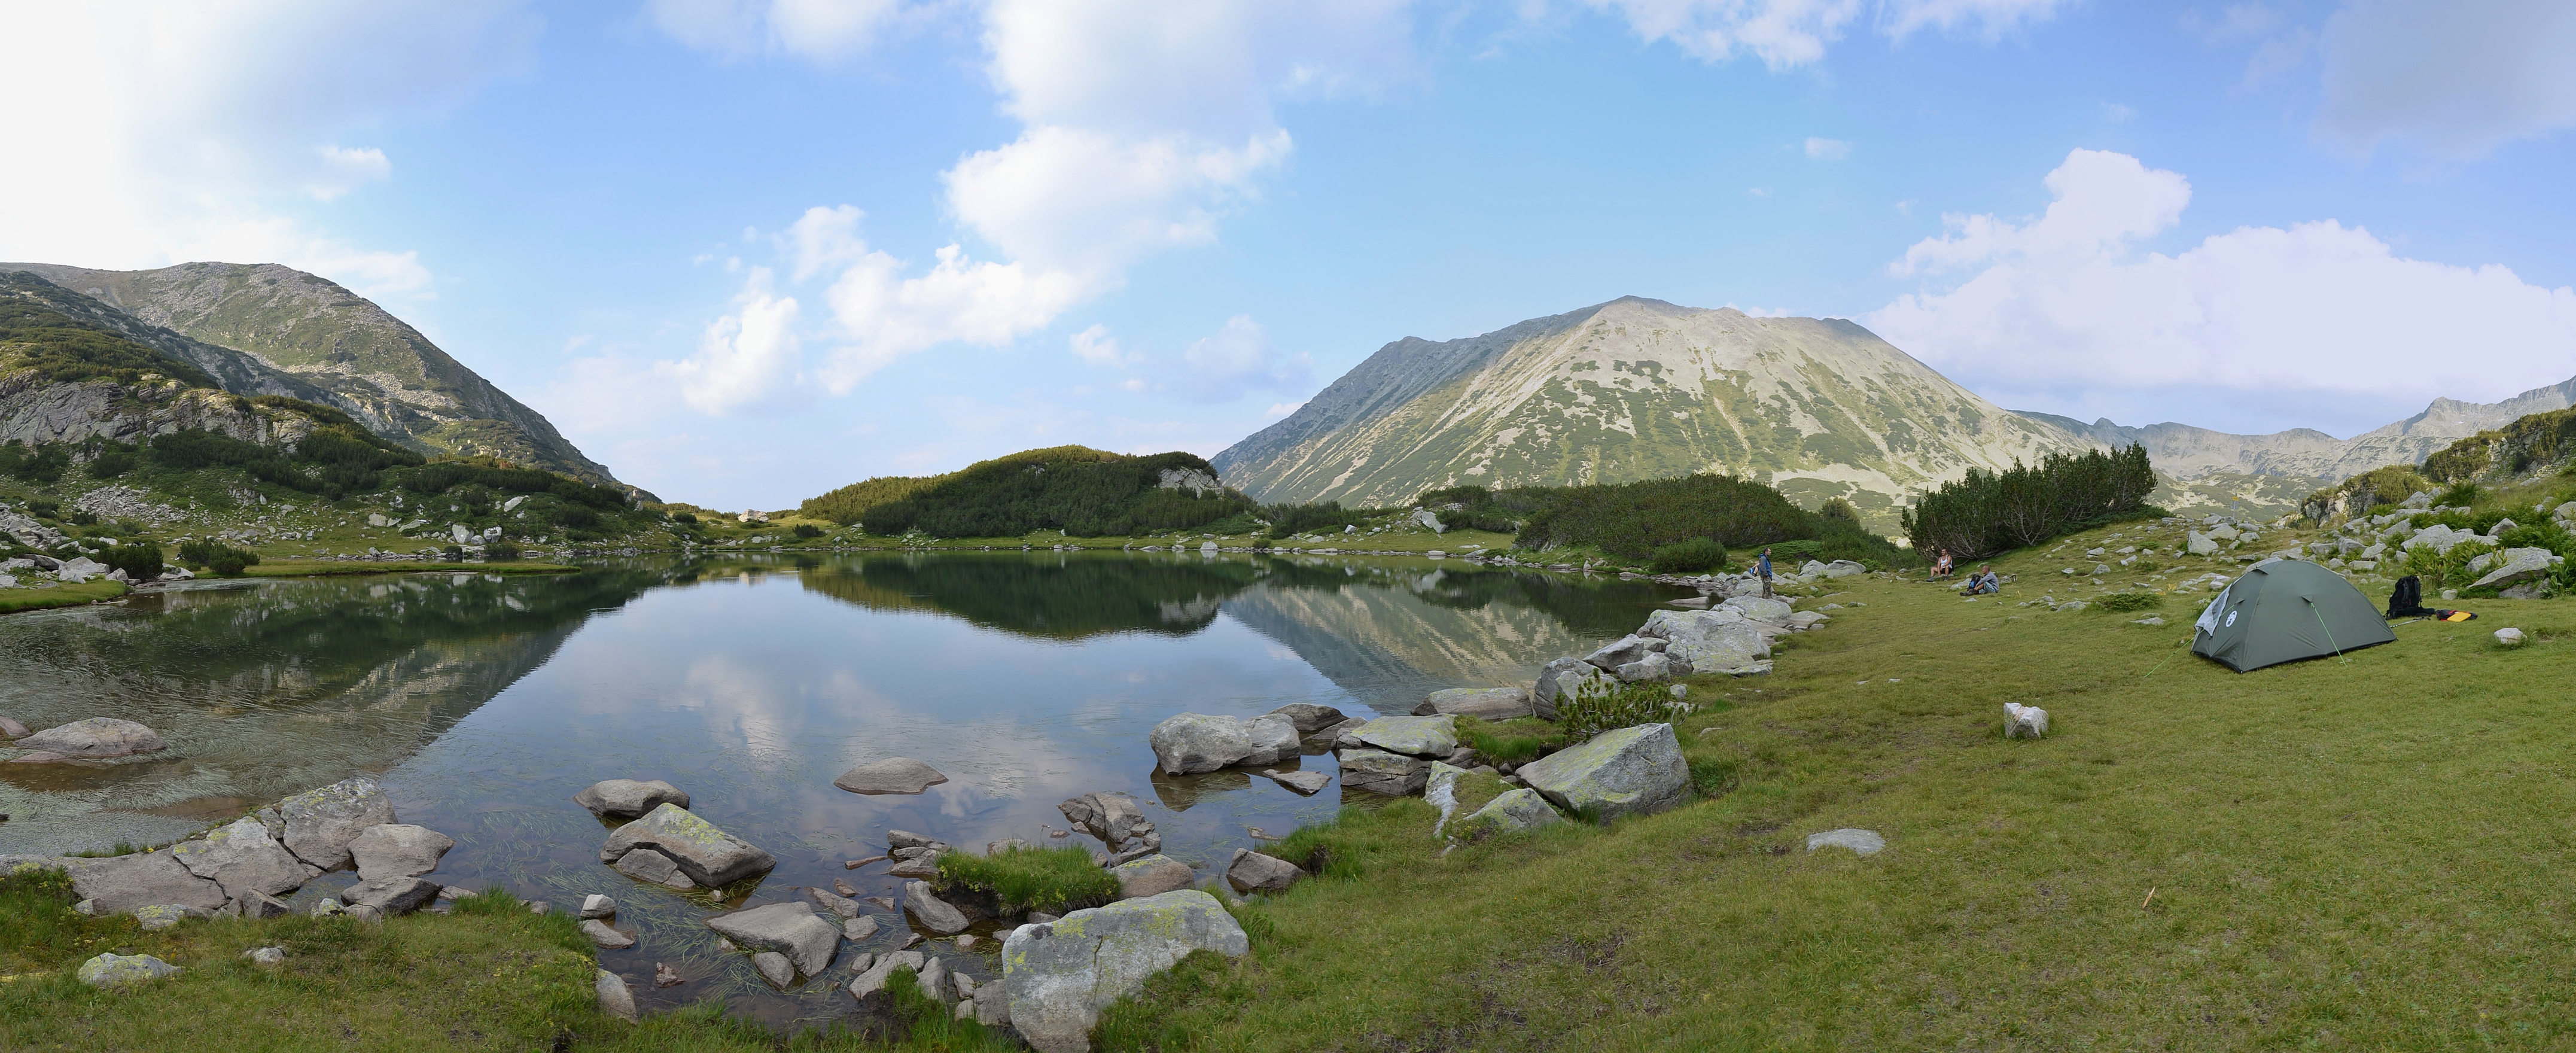 Muratovo Lake (Муратово езеро), Pirin